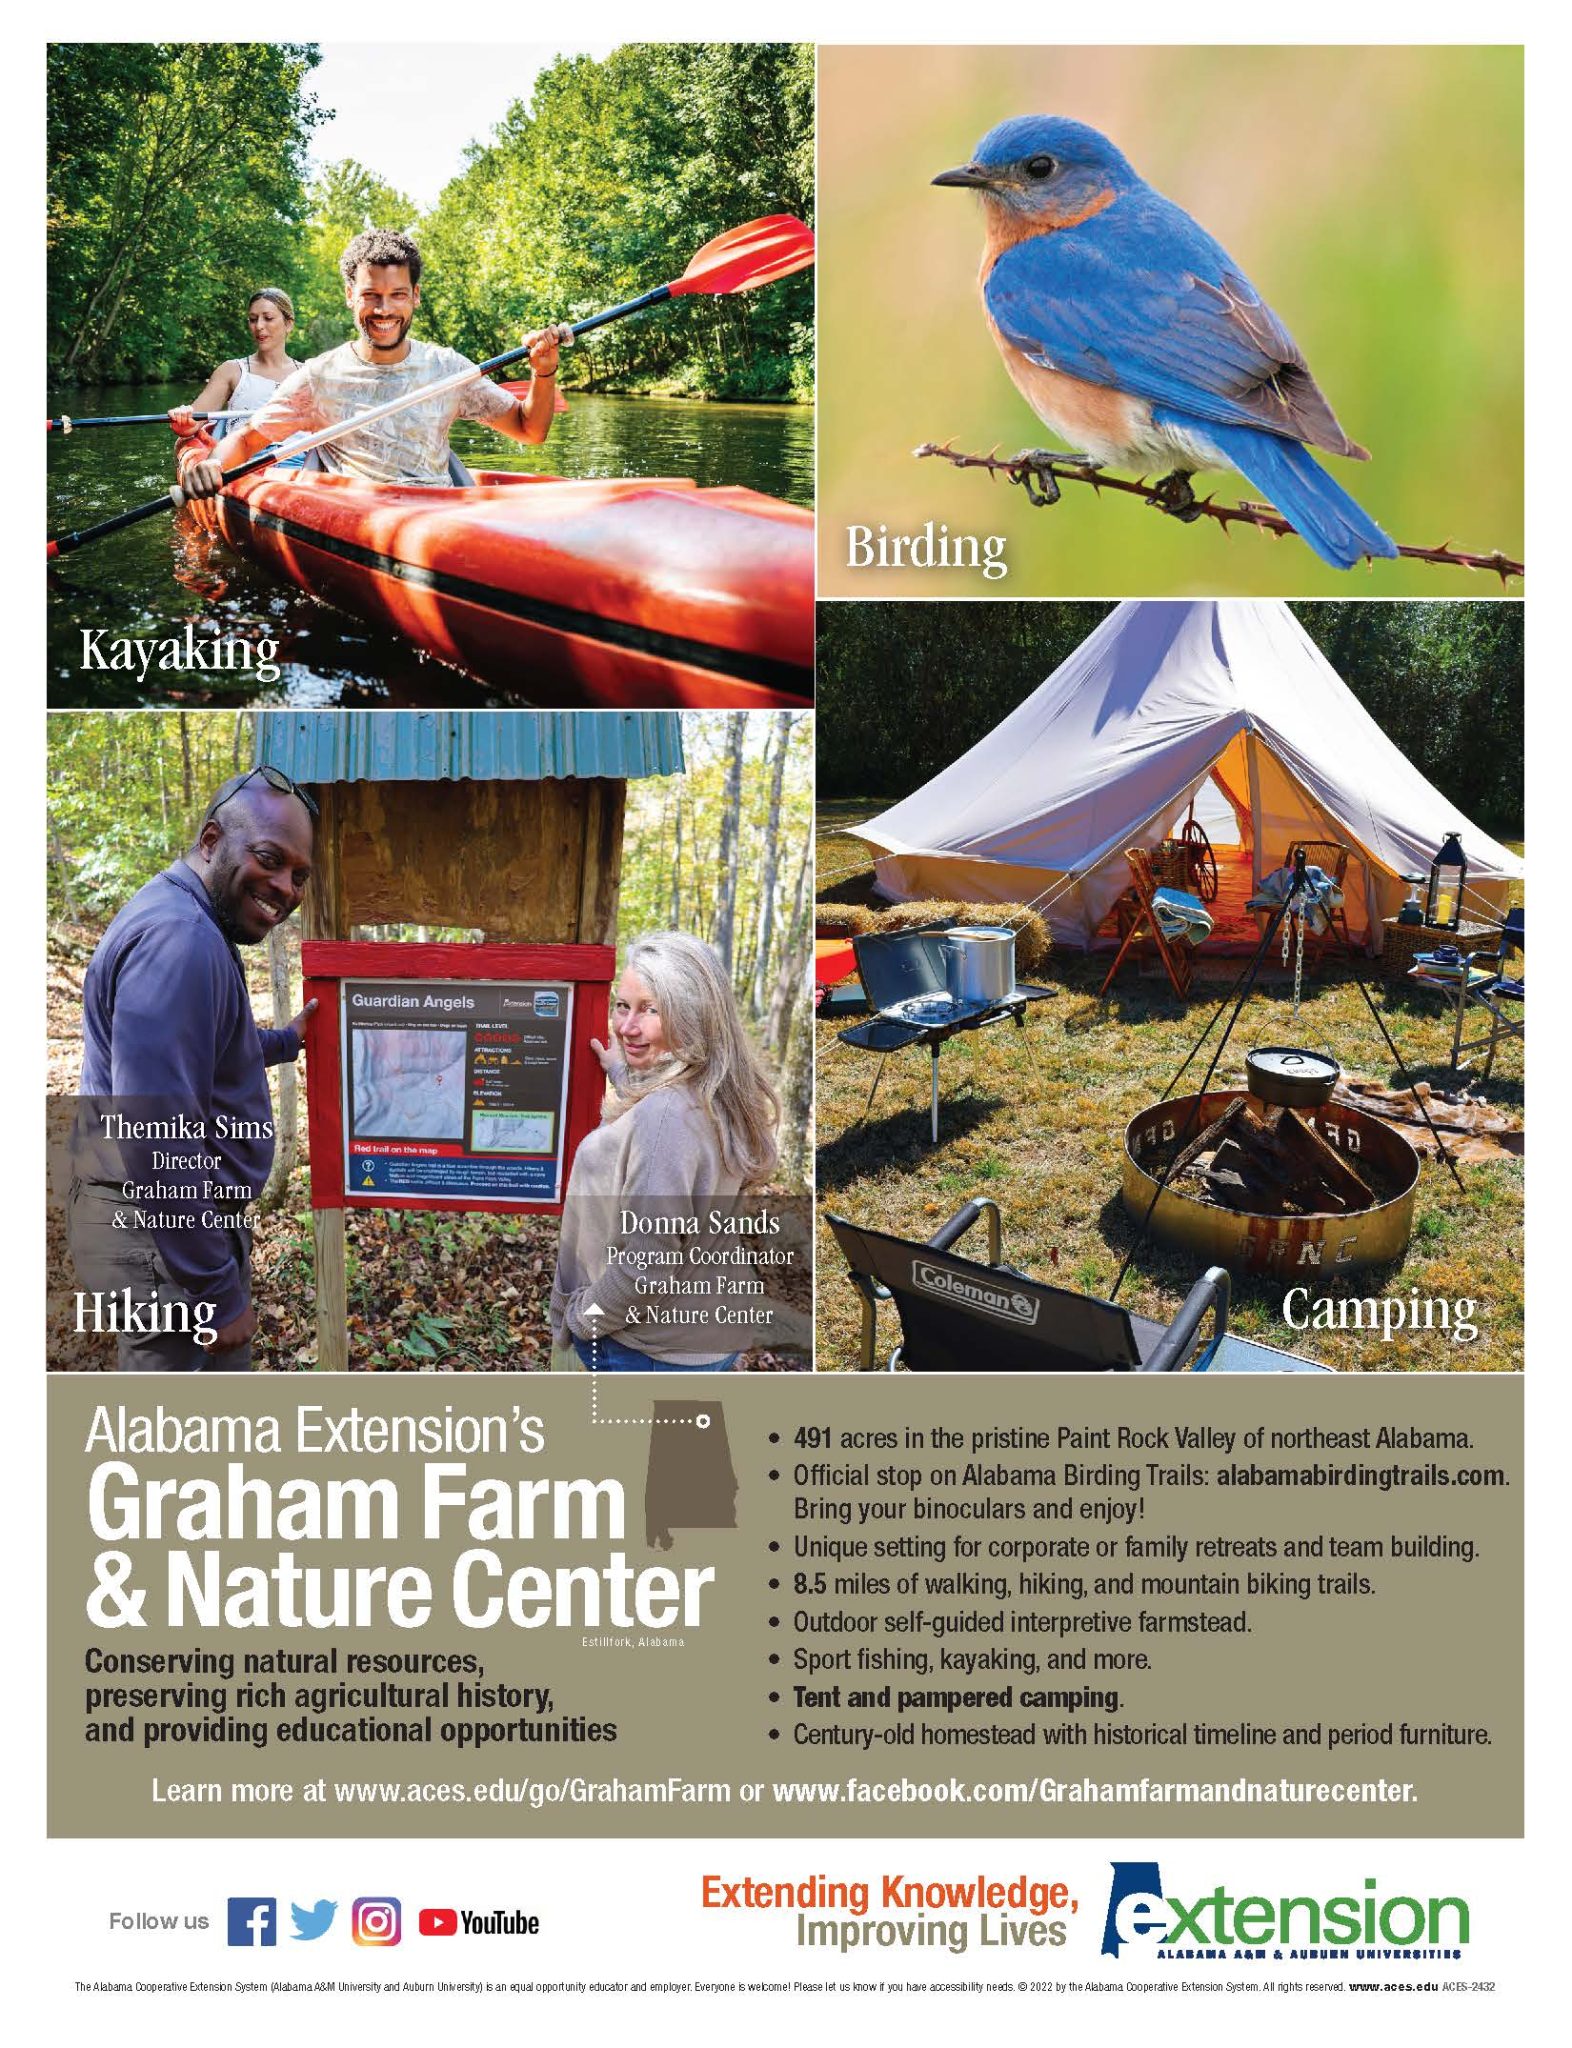 Themika Sims – Director, Graham Farm & Nature Center and Donna Sands – Program Coordinator, Graham Farm & Nature Center